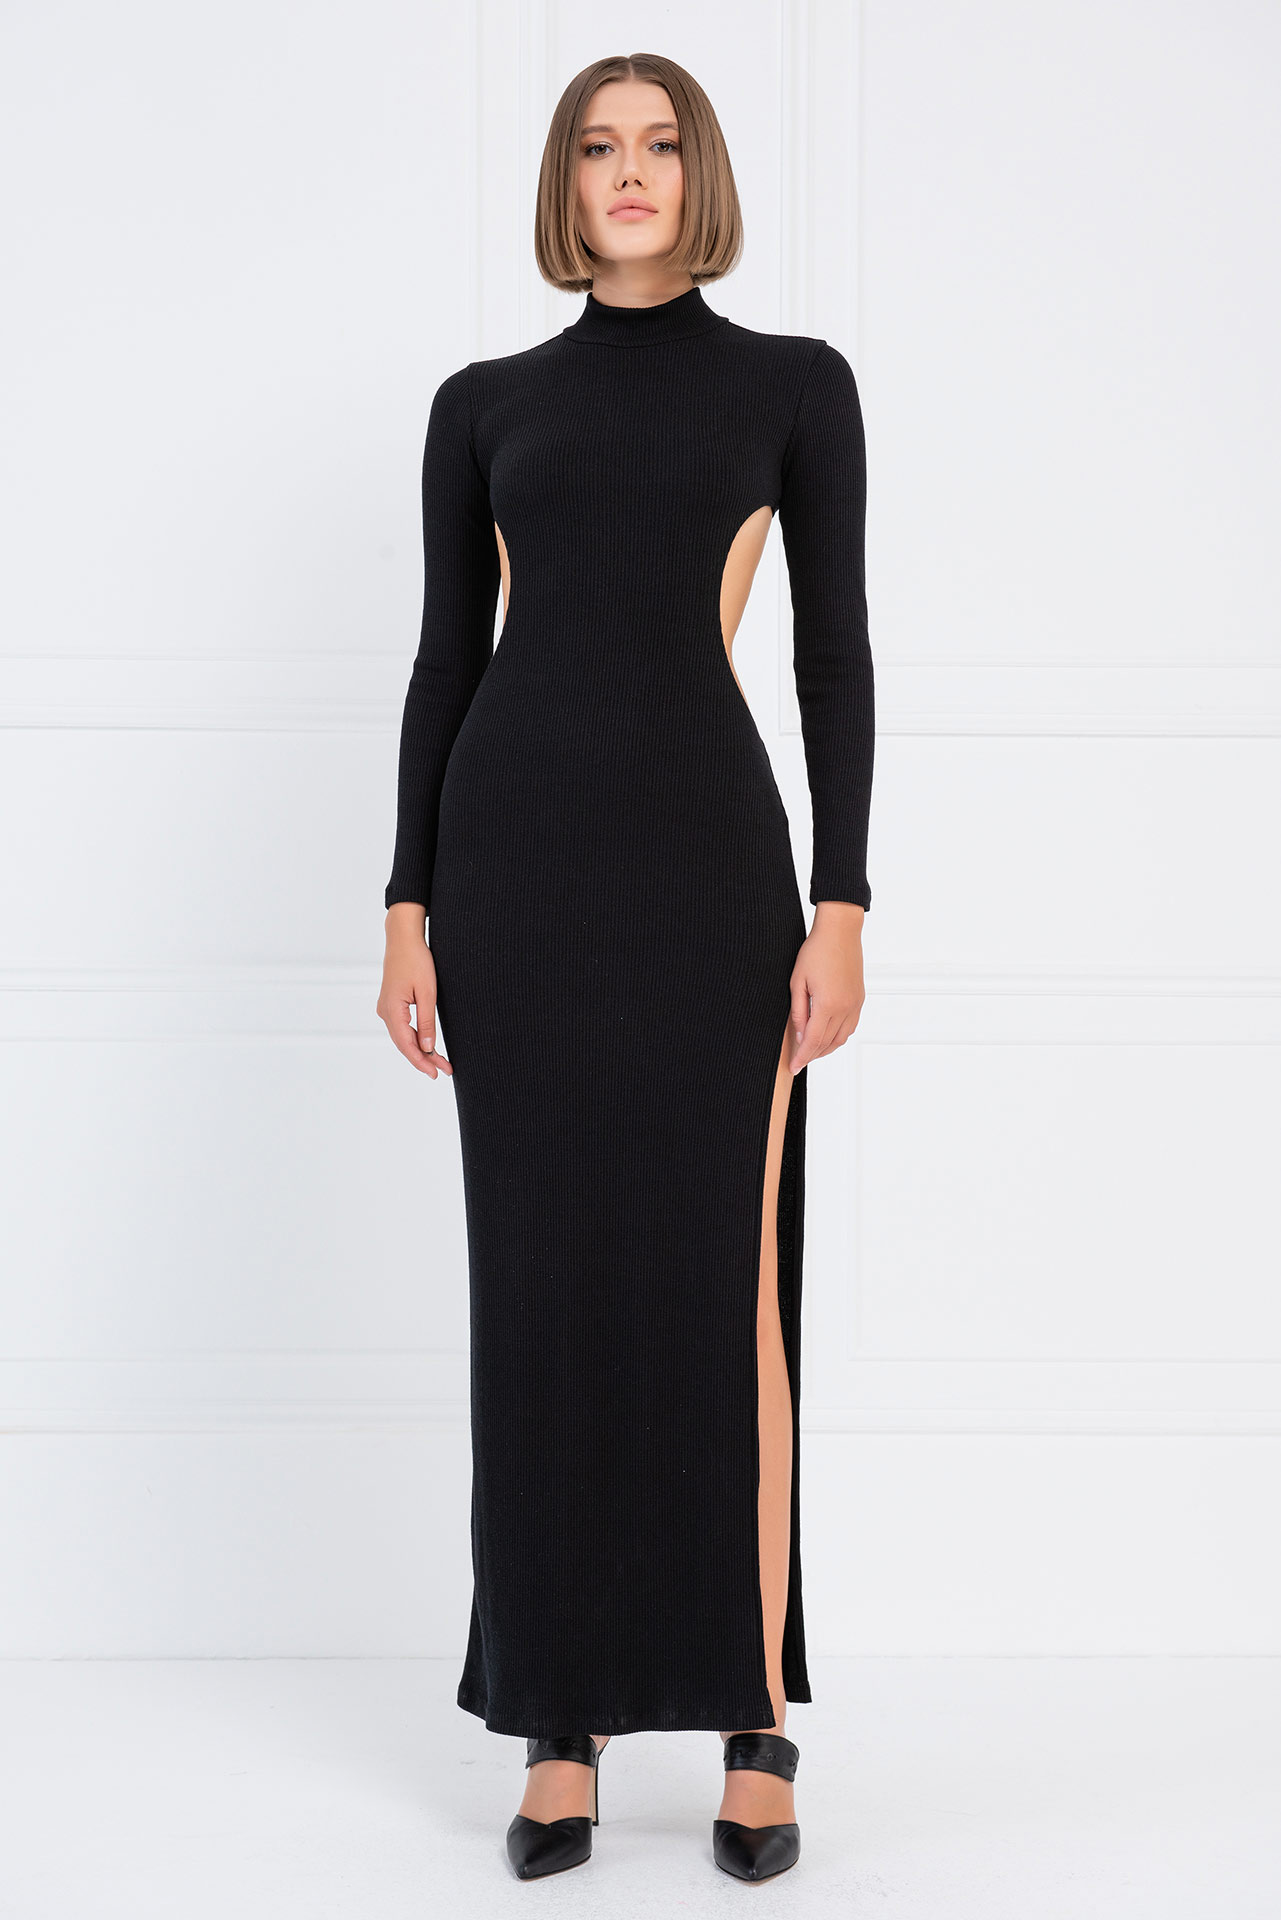 Wholesale Black Backless Split-Leg Maxi Dress